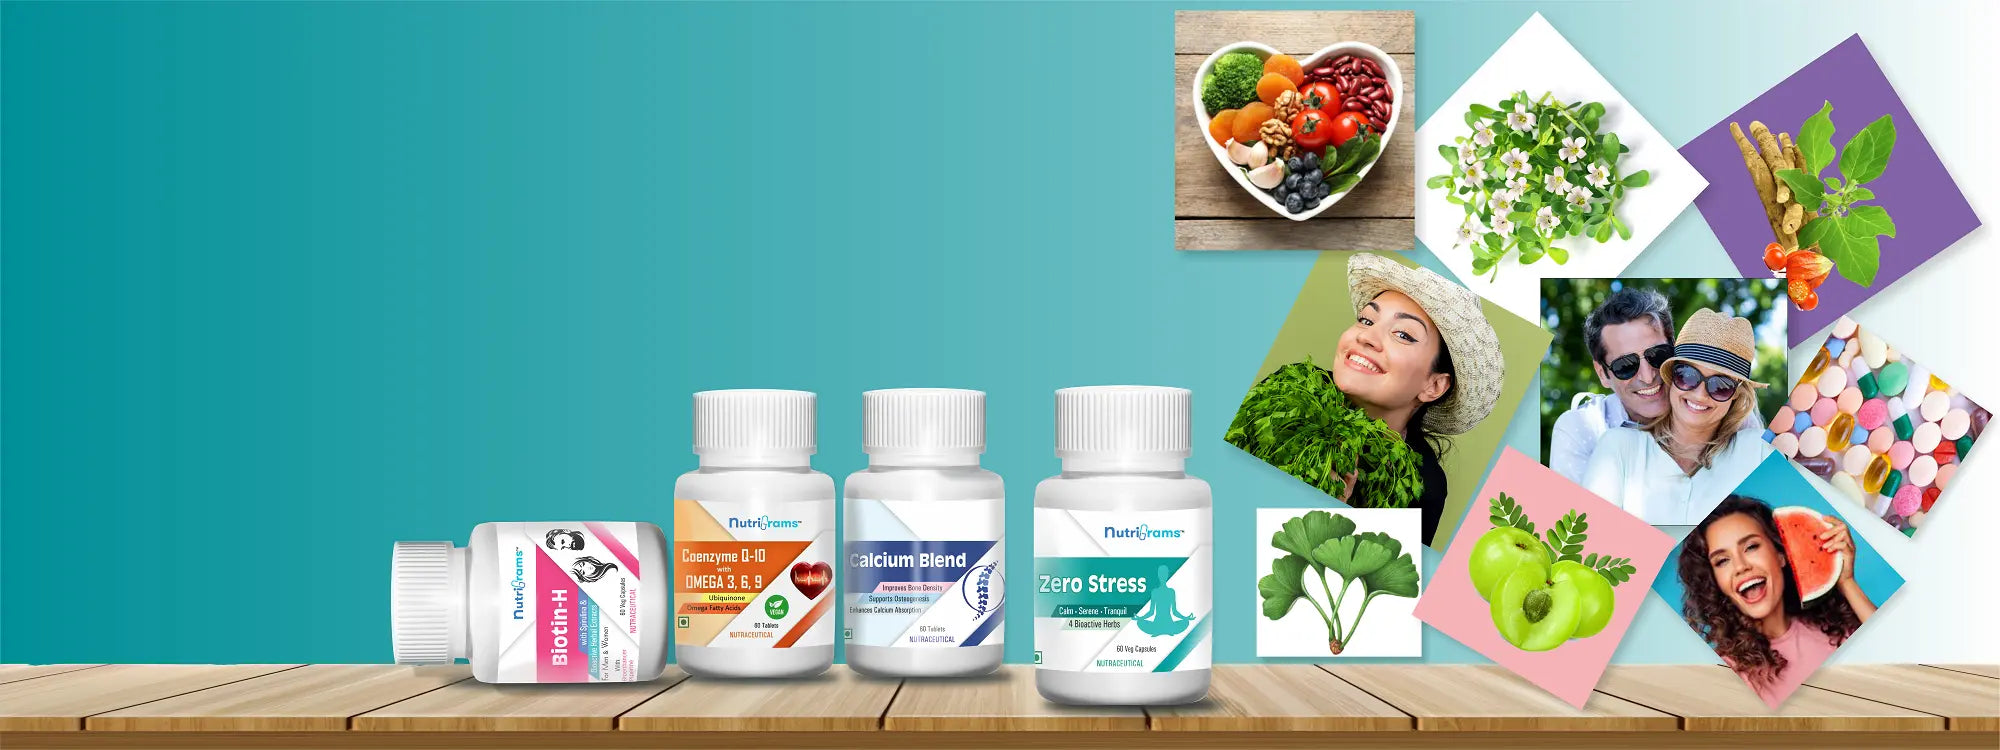 Nutrigrams - Natural Health Supplements